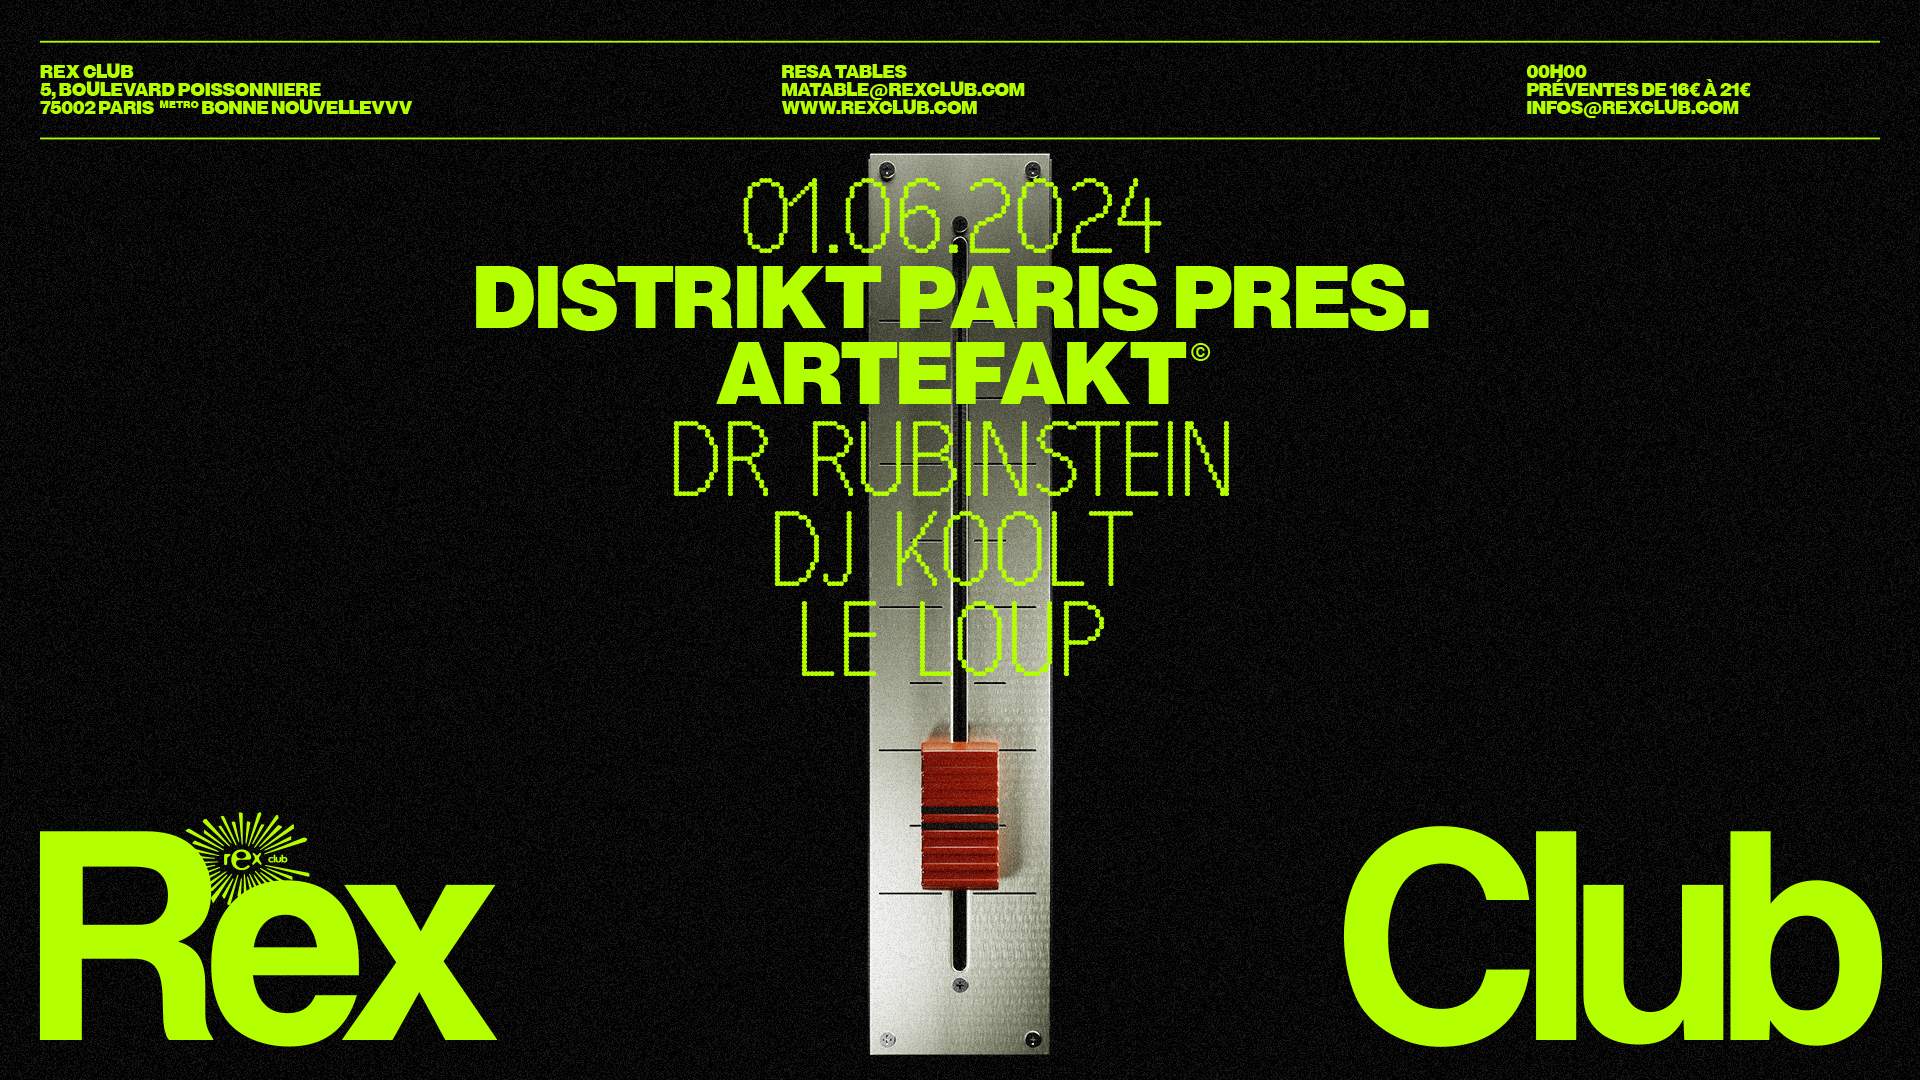 Distrikt Paris presents Artefakt: Dr Rubinstein, DJ Koolt, Le Loup - フライヤー表